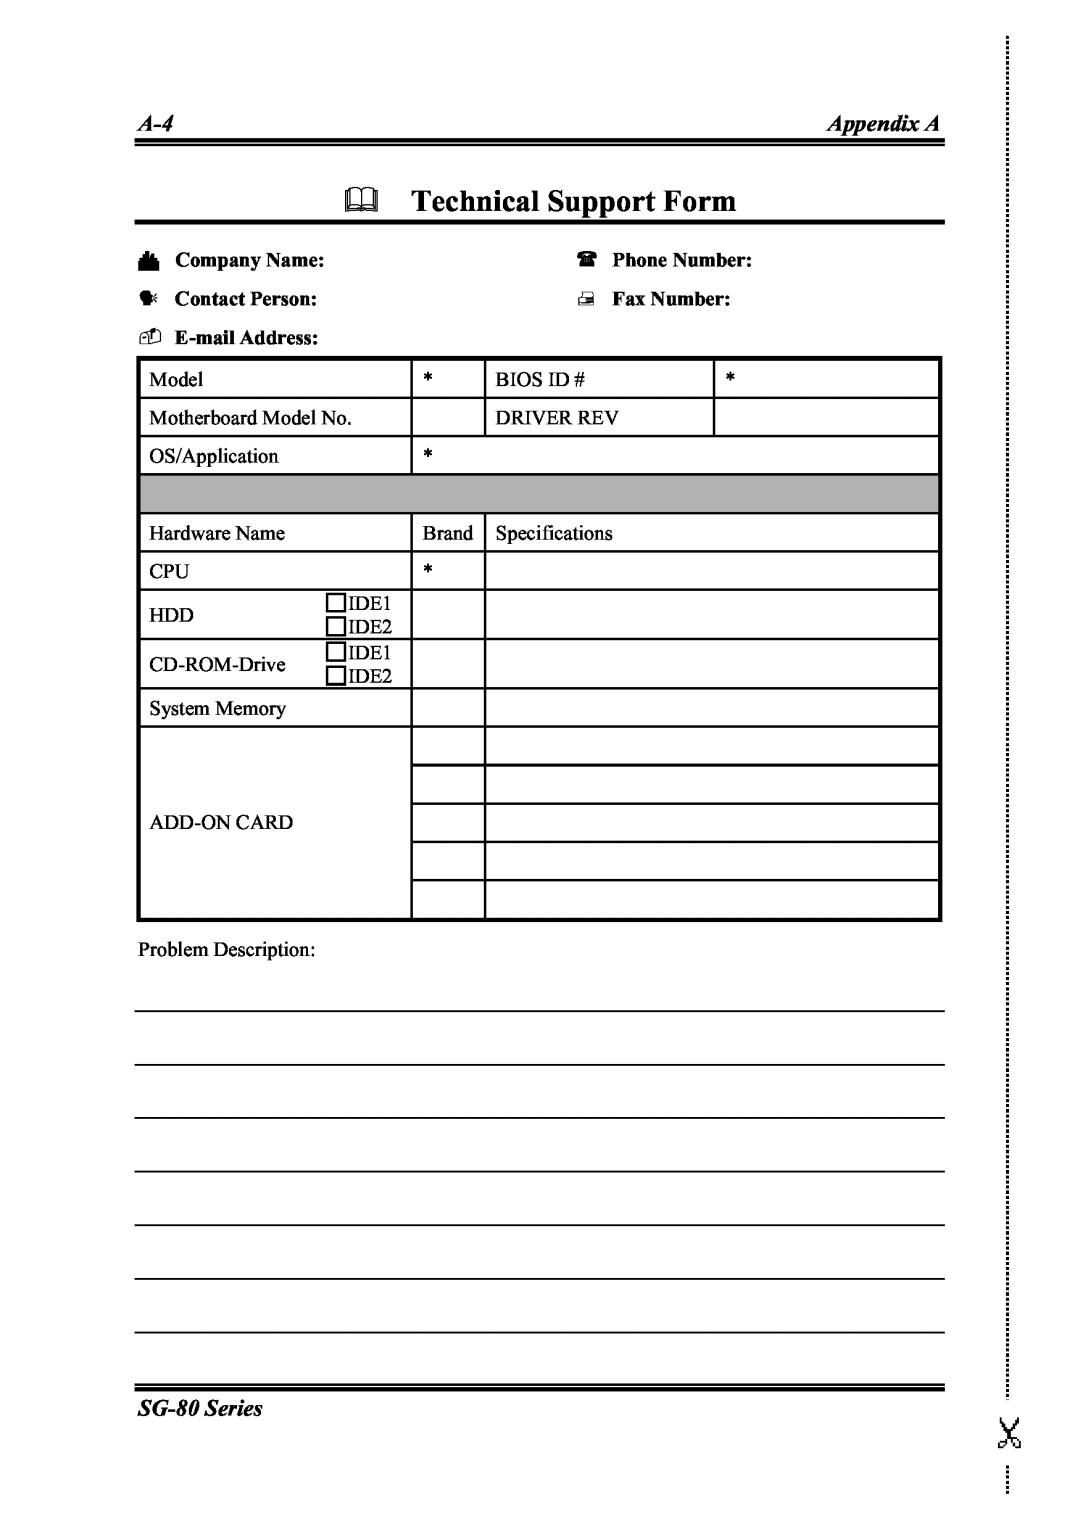 Intel SG-81 user manual Technical Support Form, Appendix A, SG-80Series 